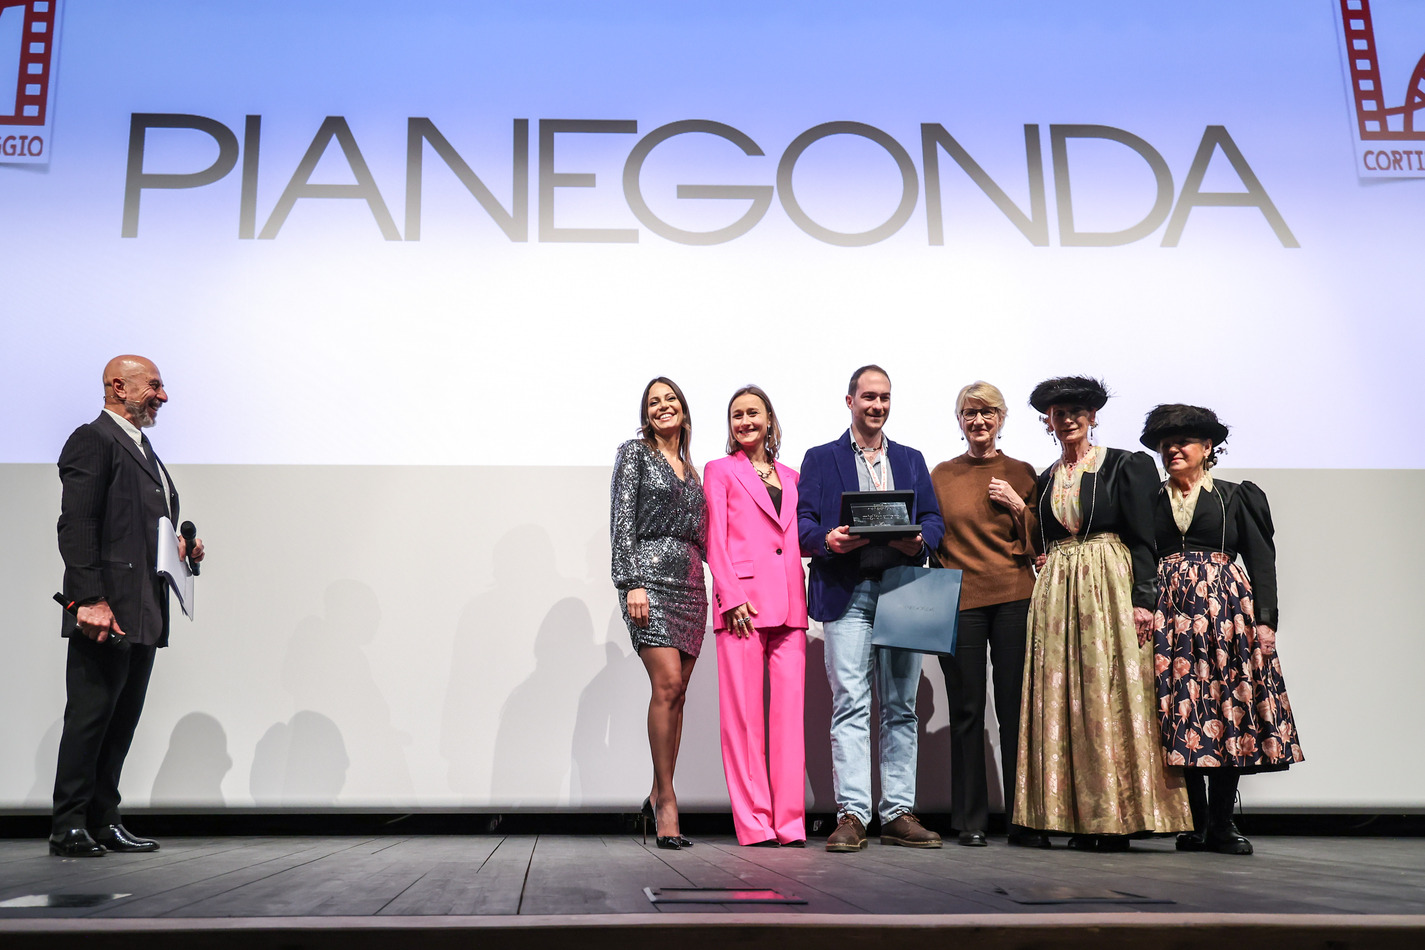 Pianegonda Main Partner of Cortinametraggio: Winners Announced